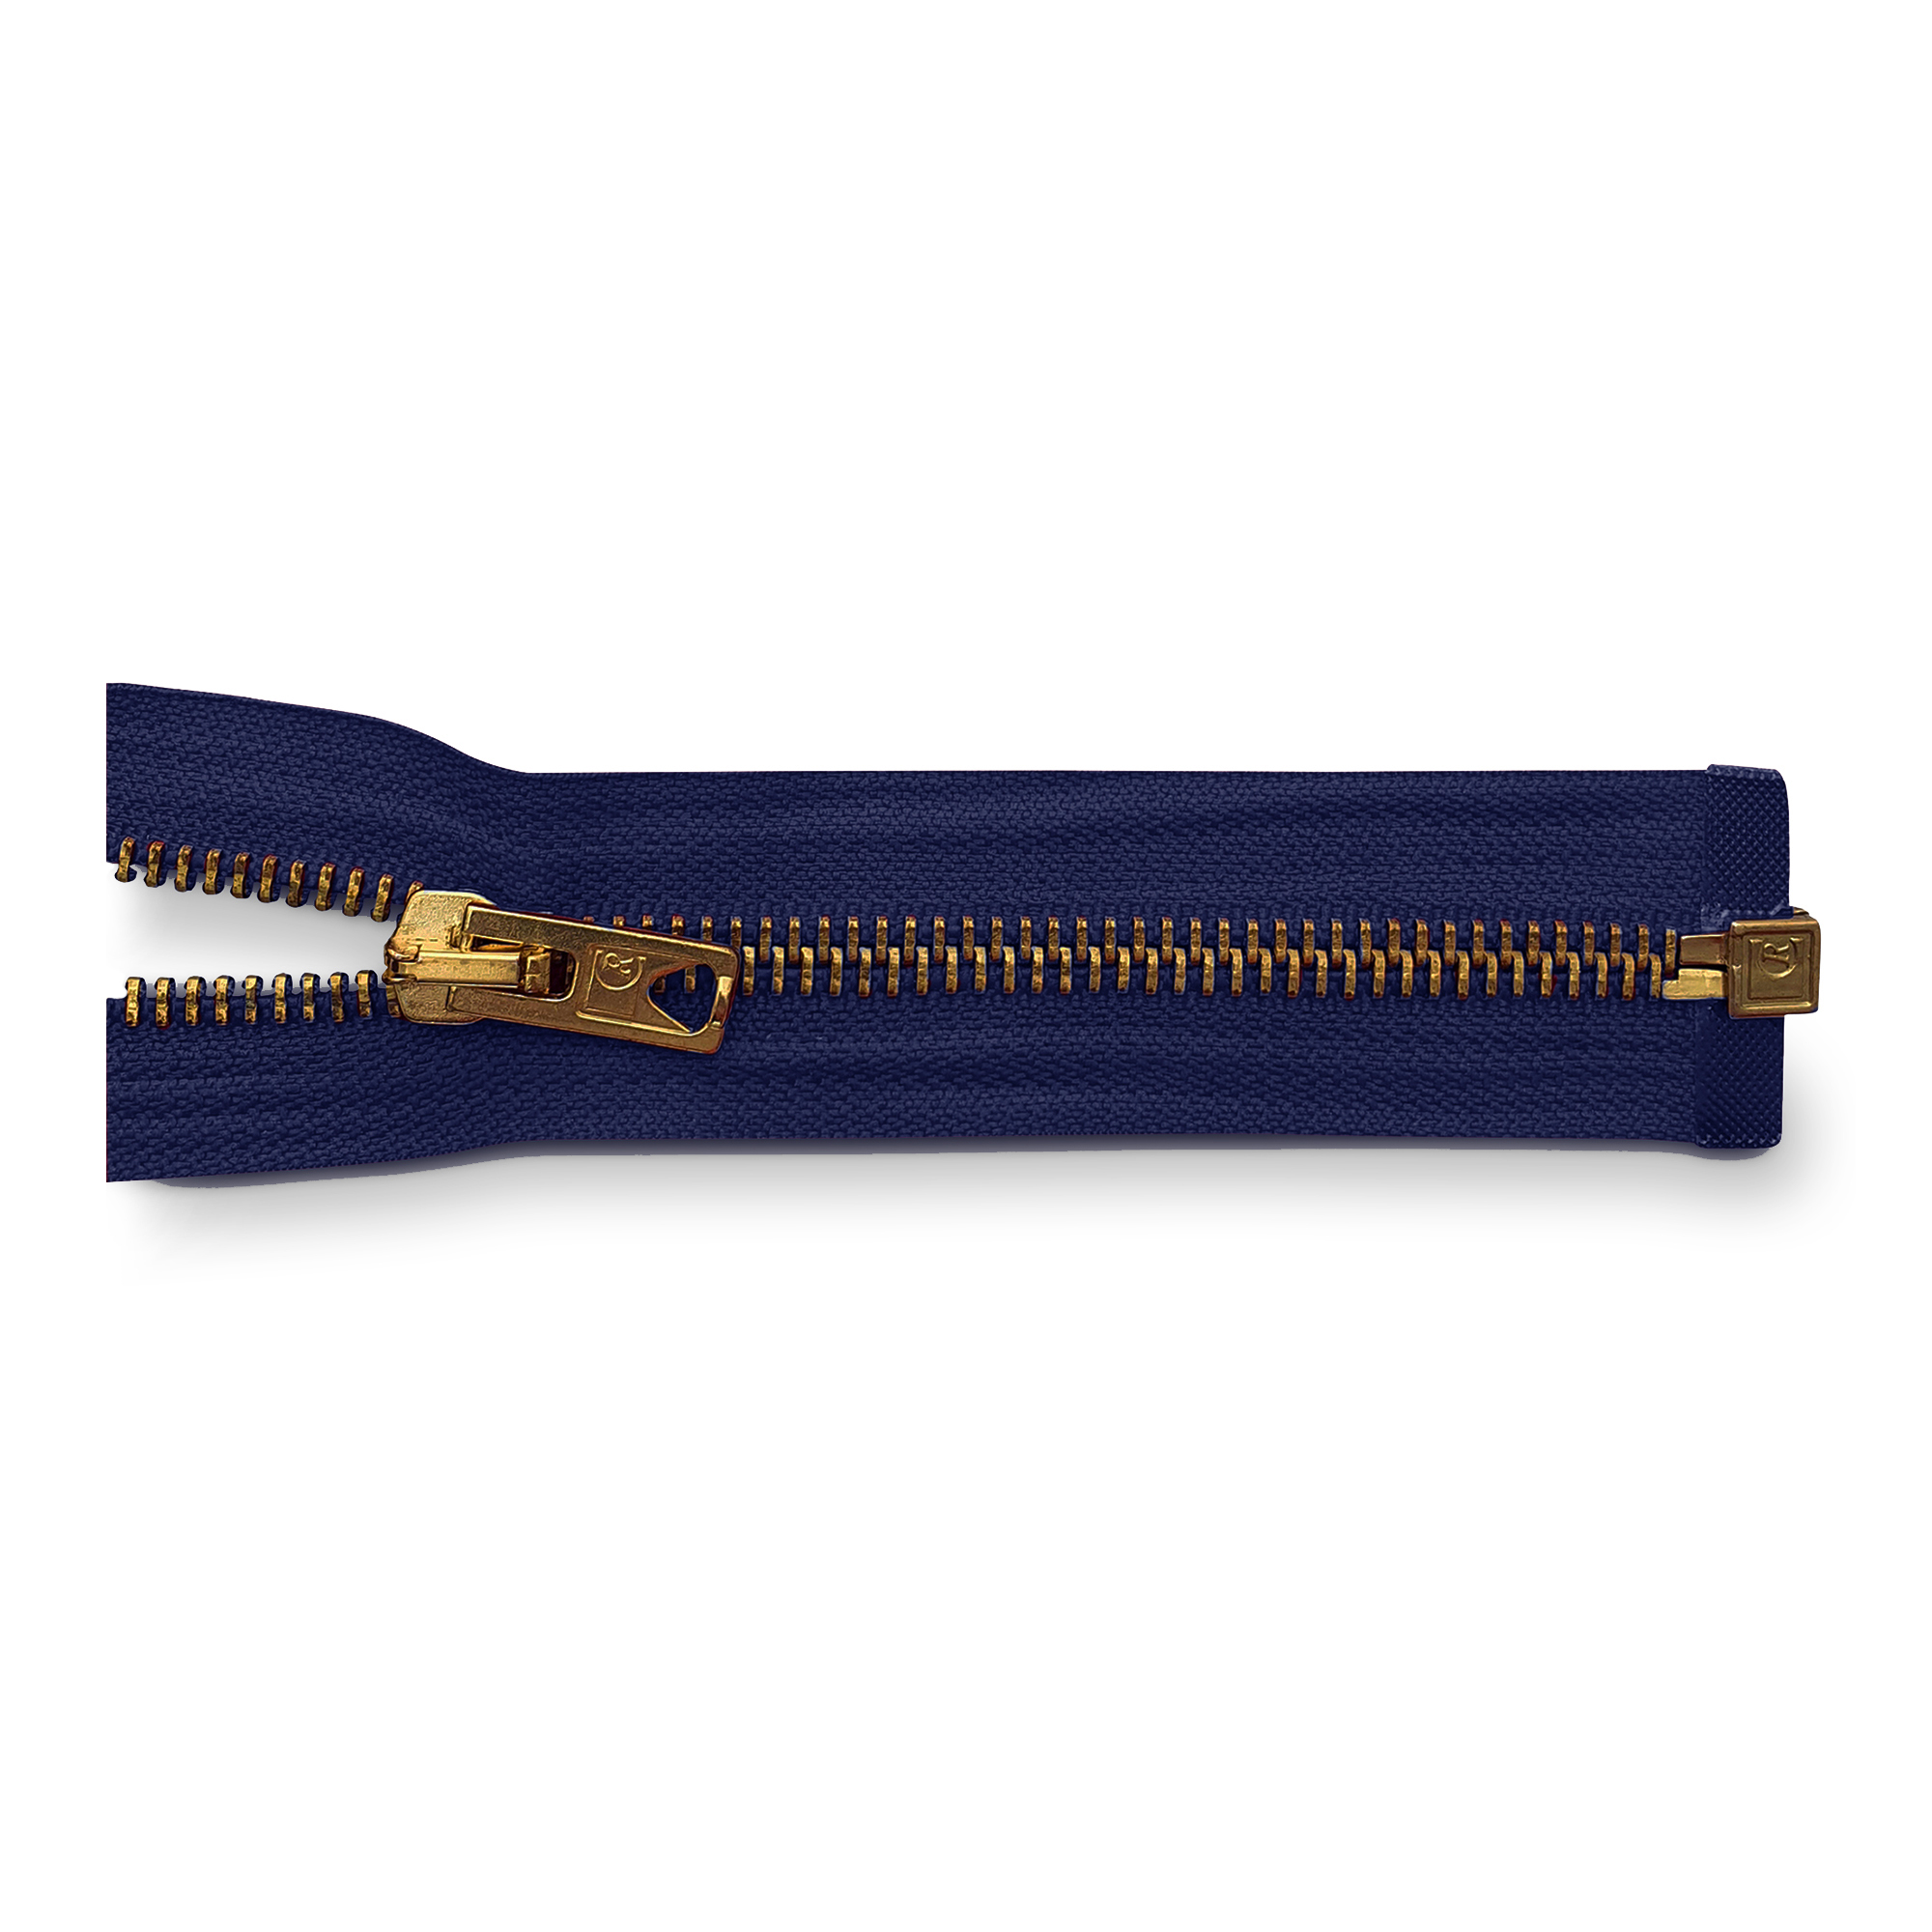 zipper 65cm,divisible, metal, brass, wide, navy